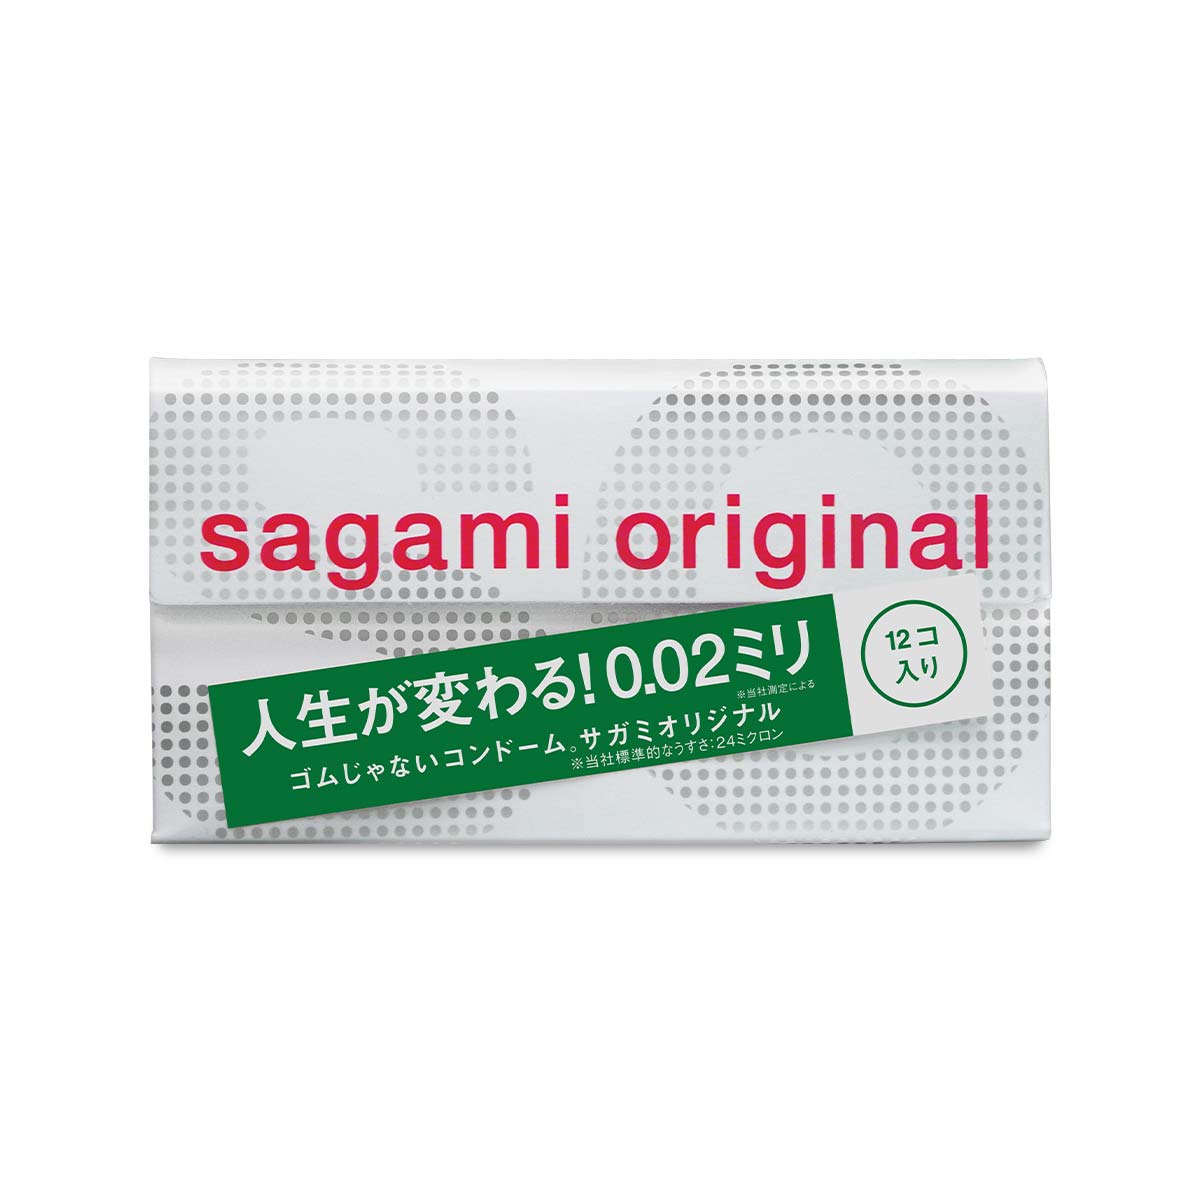 Sagami Original 0.02 12s